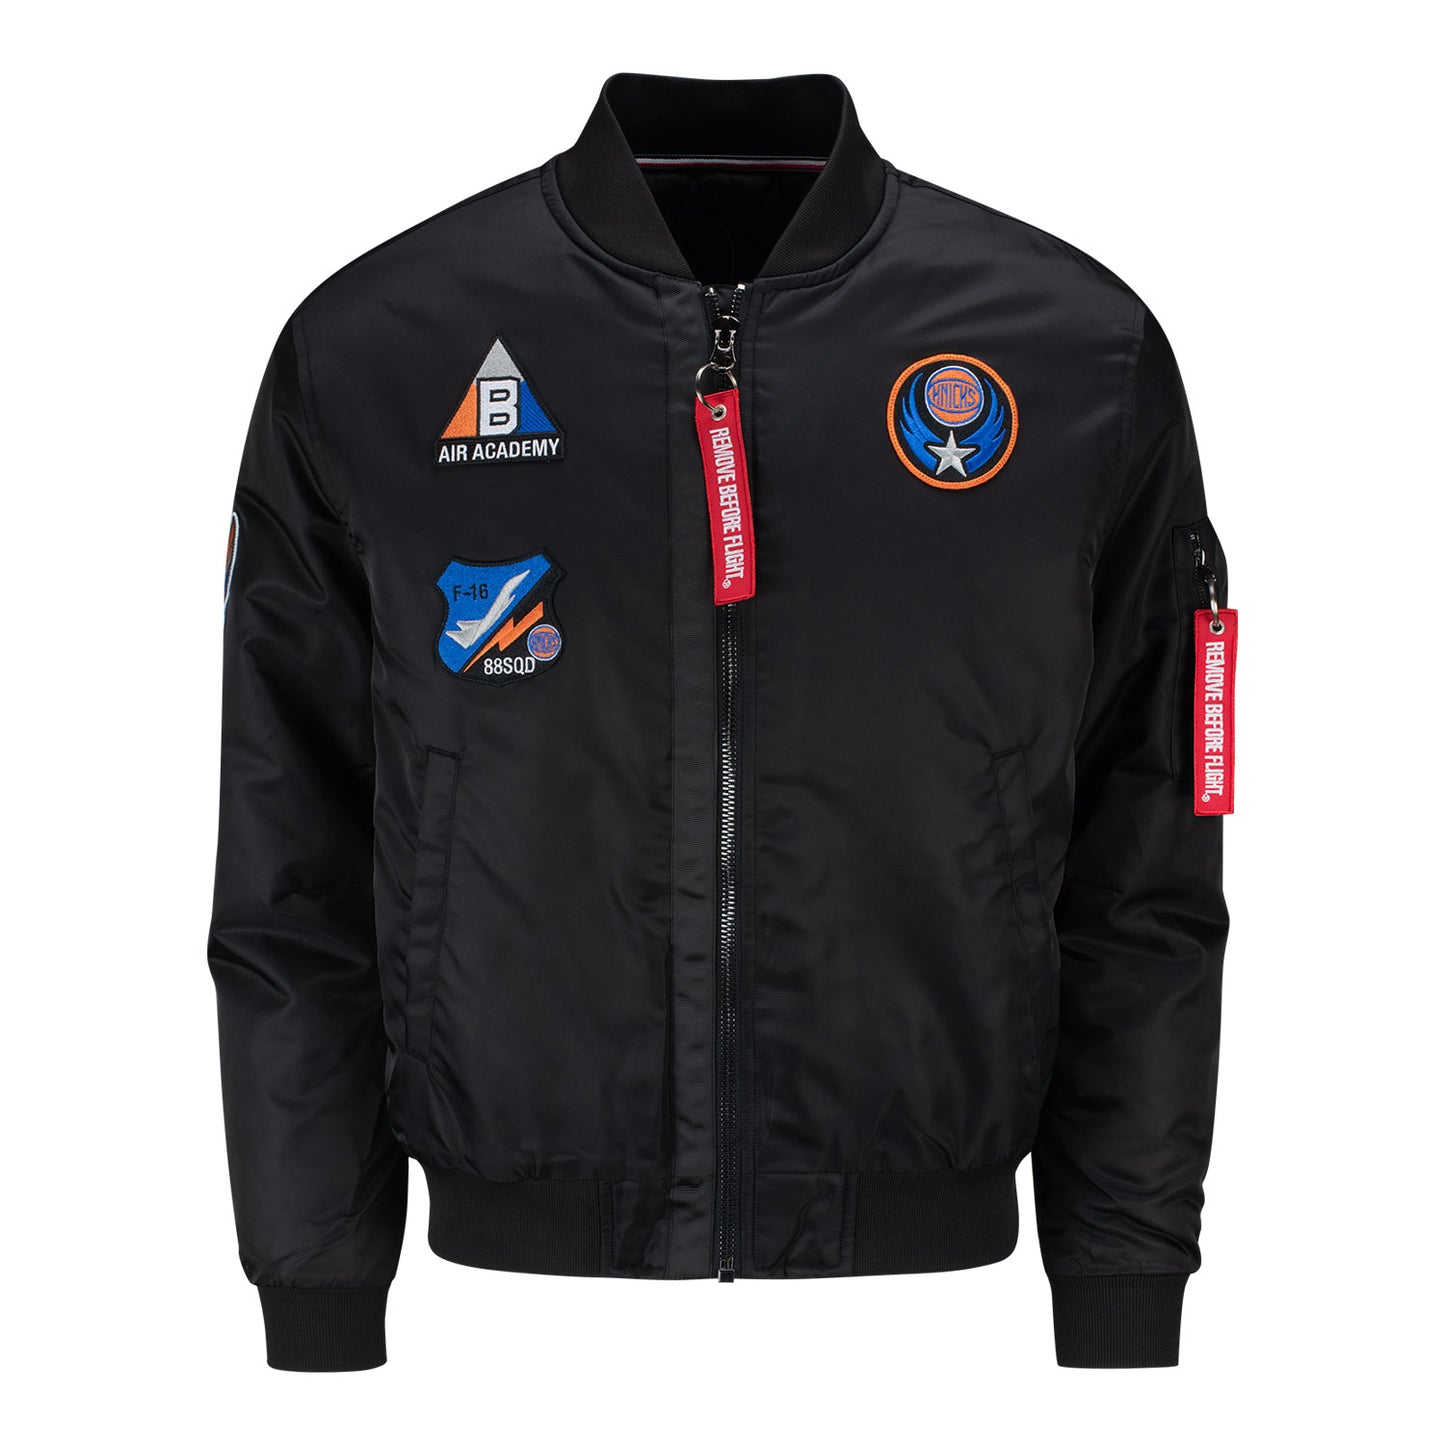 FISLL Knicks Flight Jacket In Black - Front View